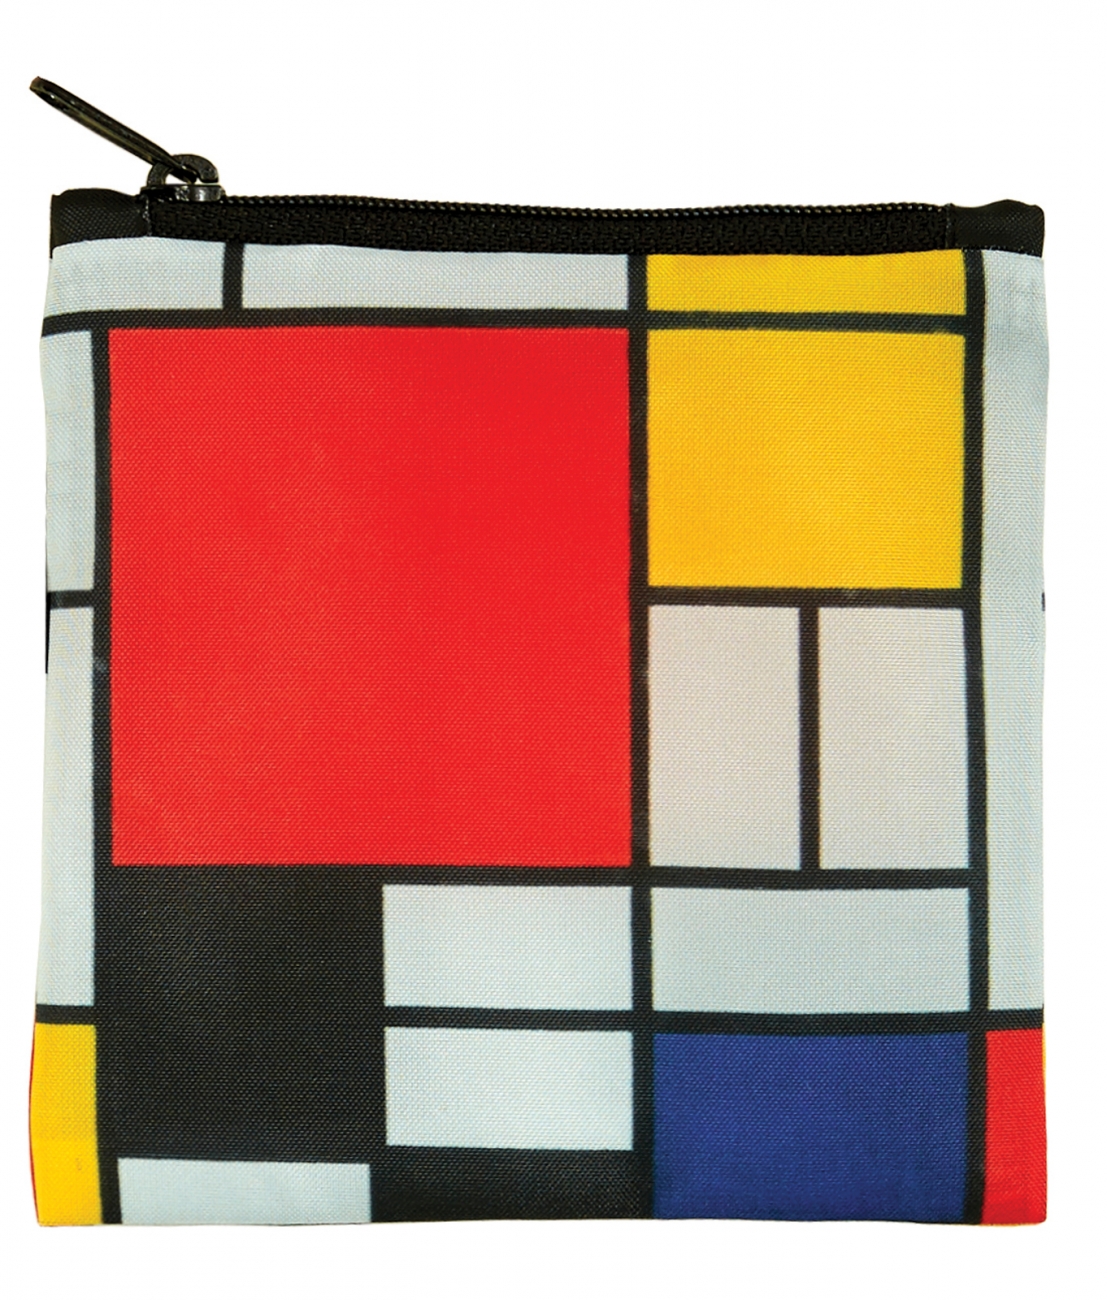 Shopping Bag Museum Collection - Piet Mondrian